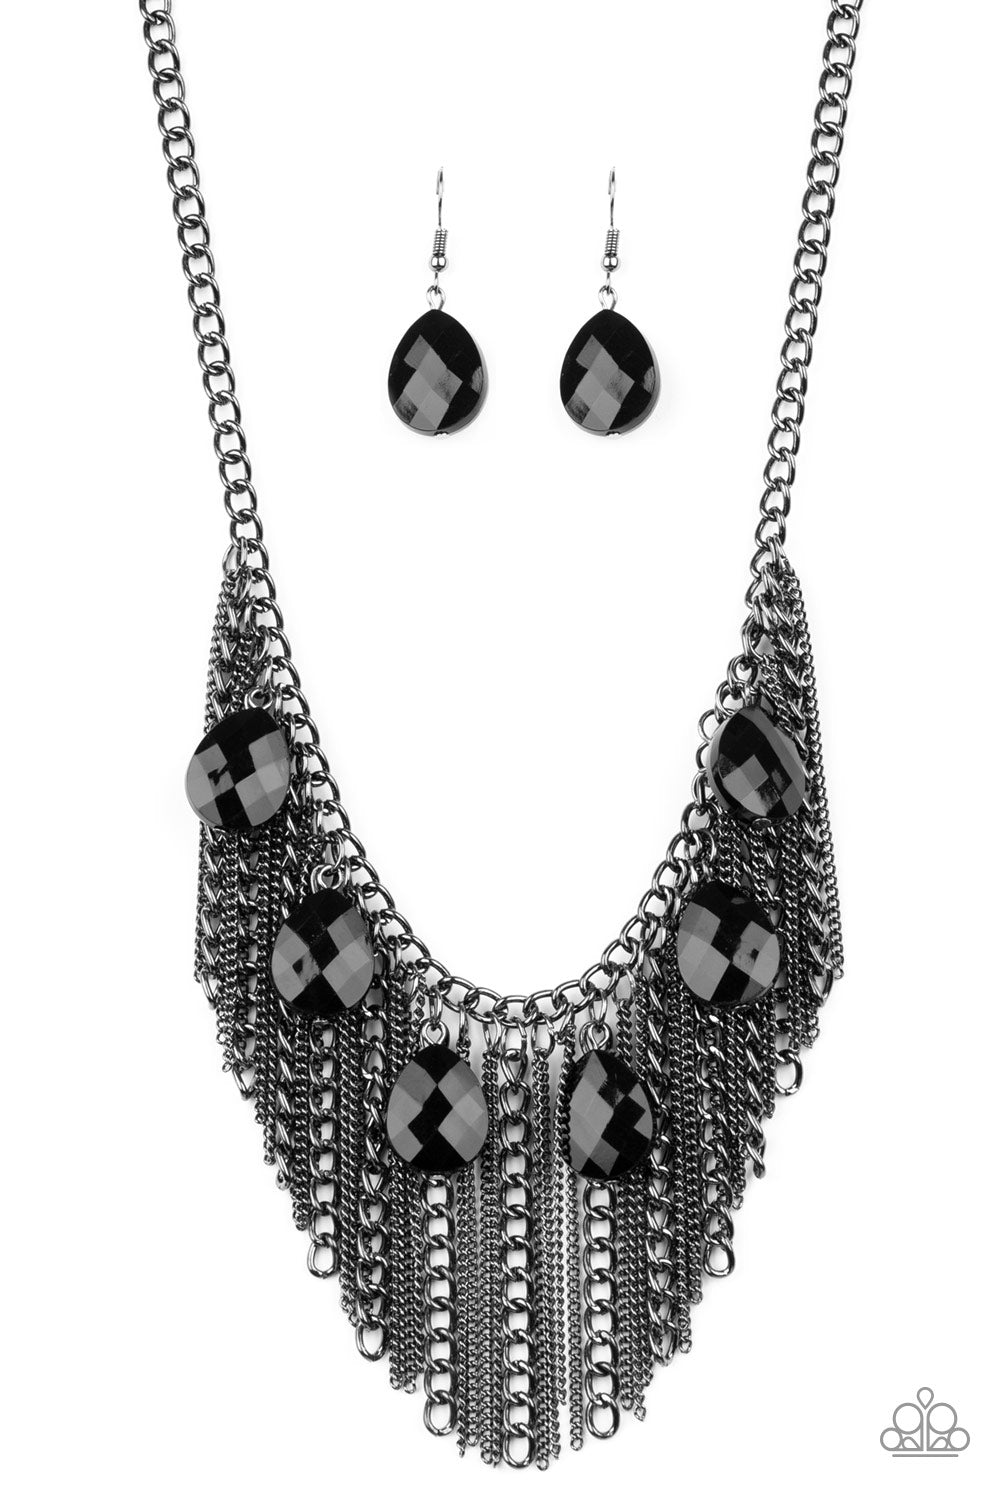 Paparazzi Jewelry Forbidden Love Black necklace ( Life of the Party  Diamond) - La Paz County Sheriff's Office 